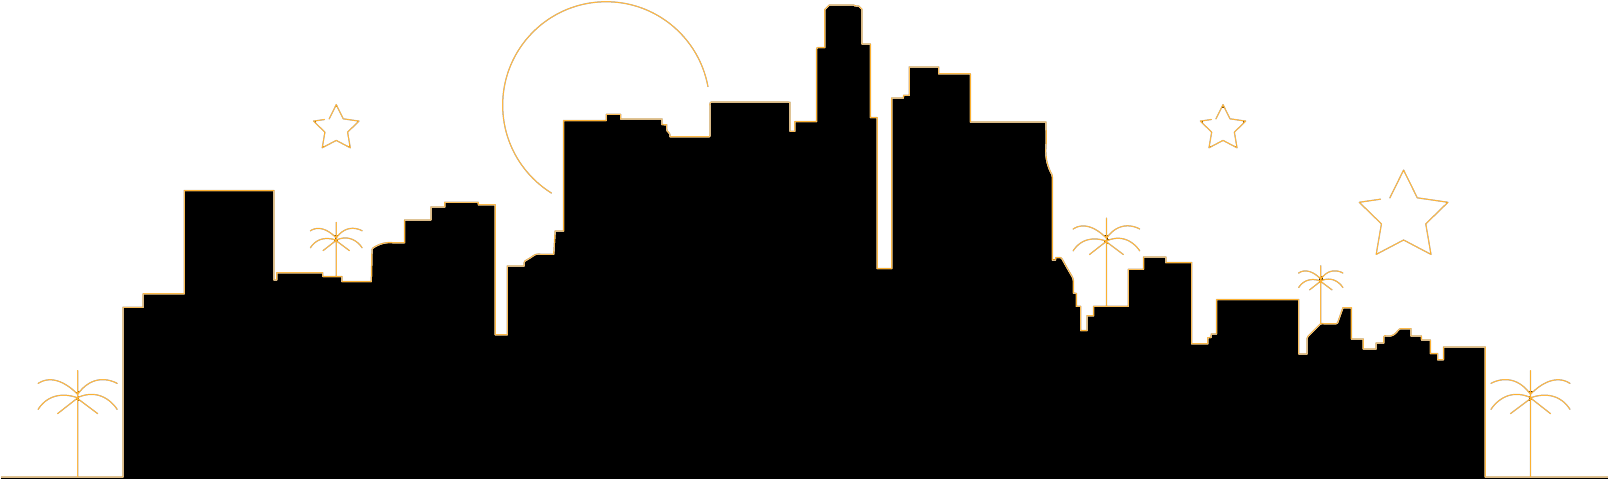 Skyline Clipart Broadway - Hollywood Skyline Silhouette (1608x479)